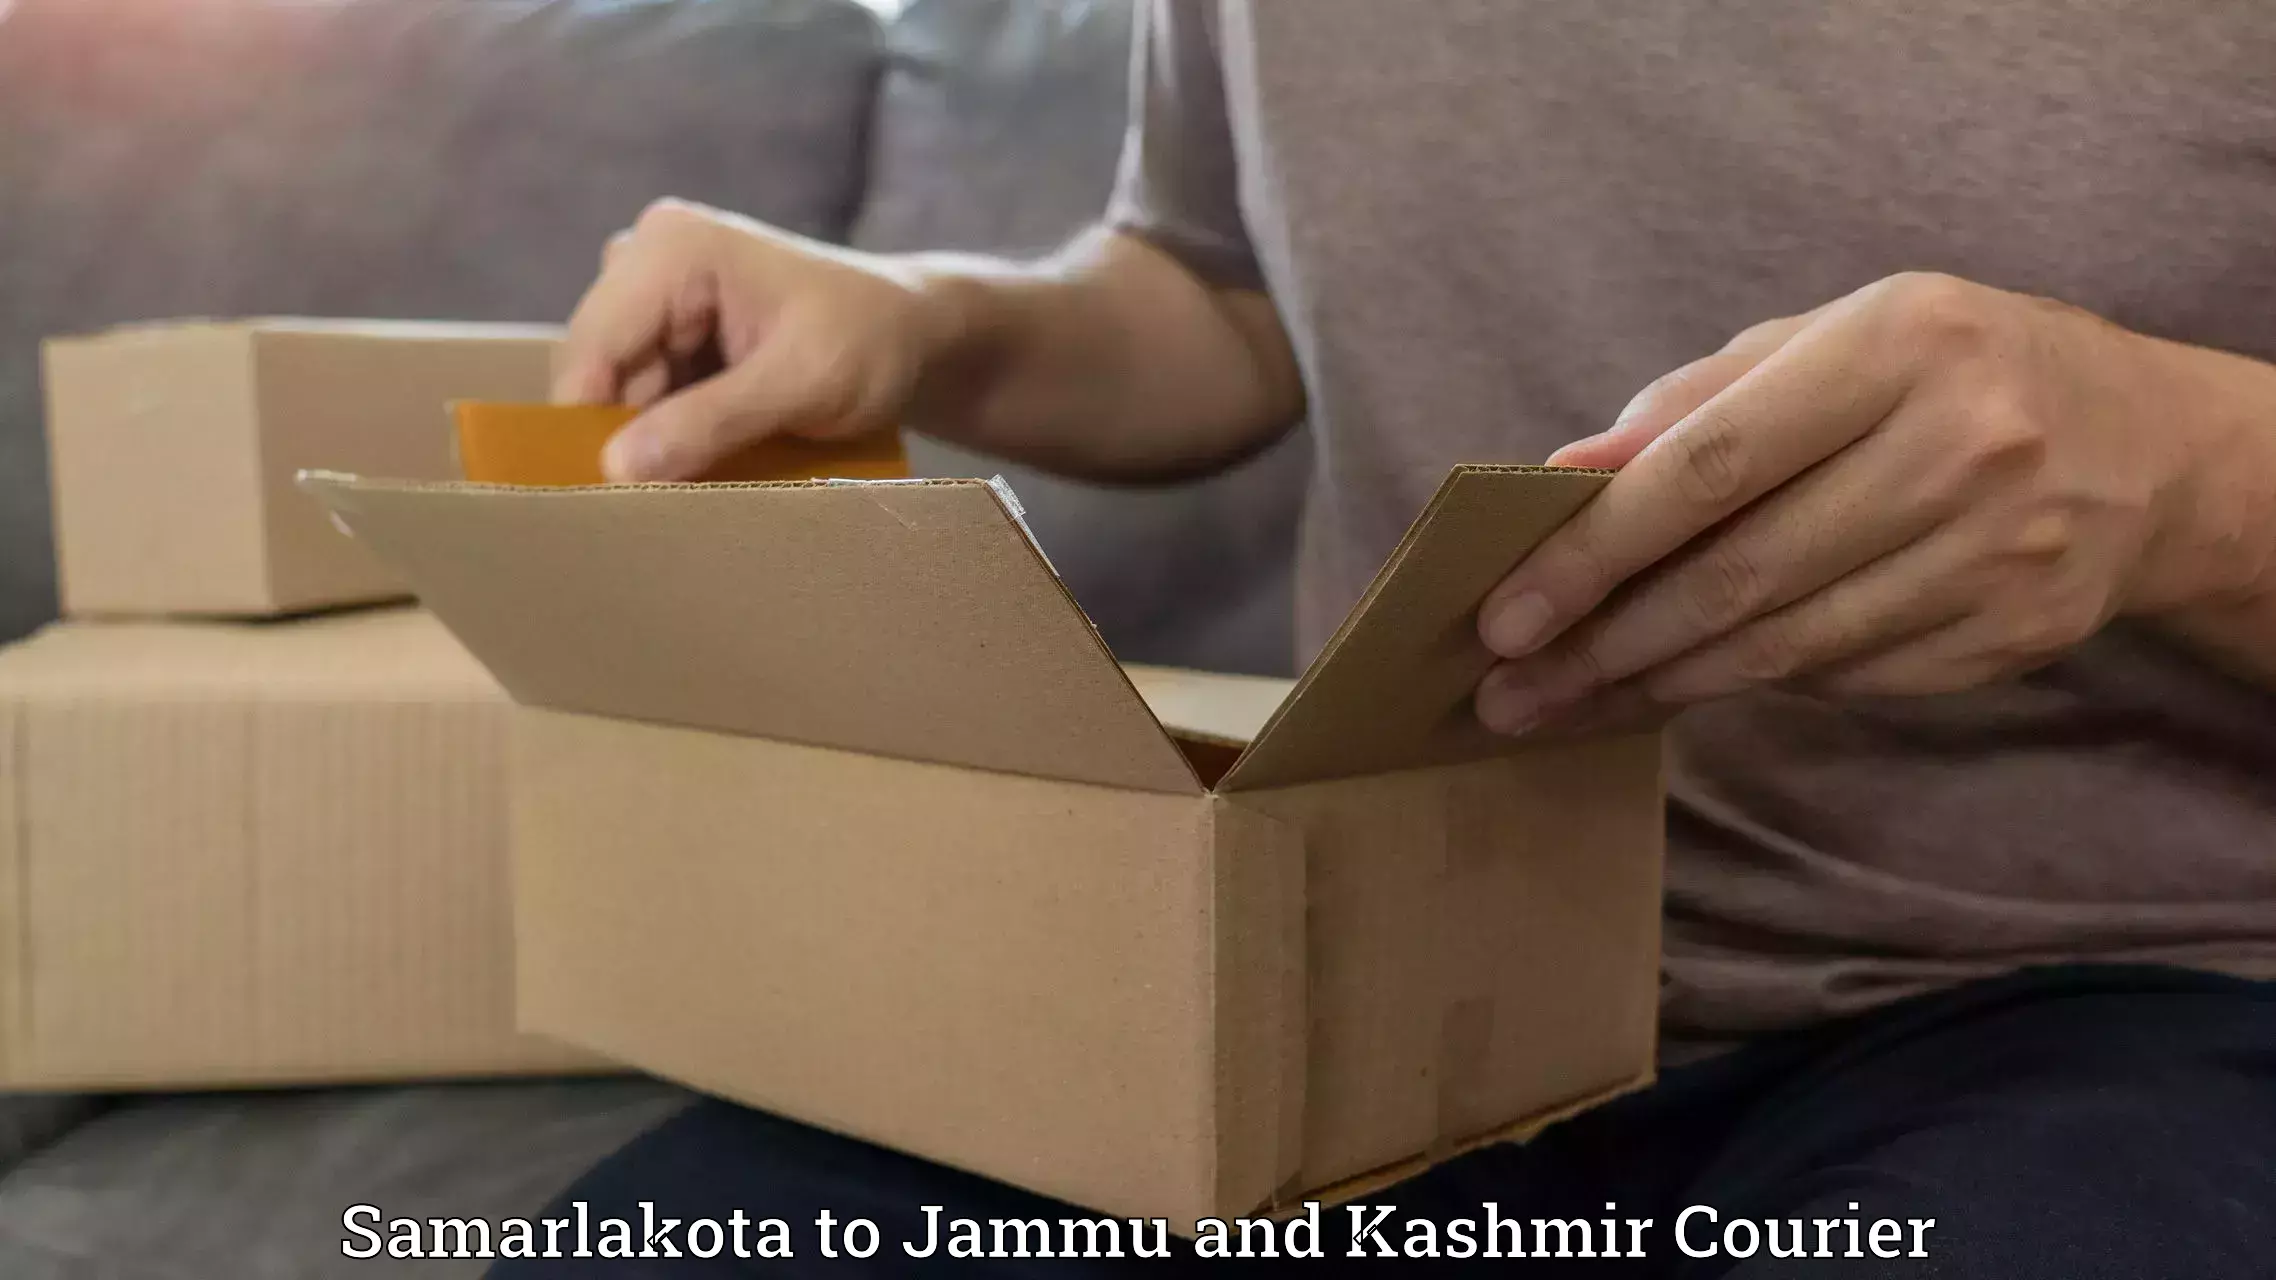 Professional courier handling Samarlakota to Srinagar Kashmir